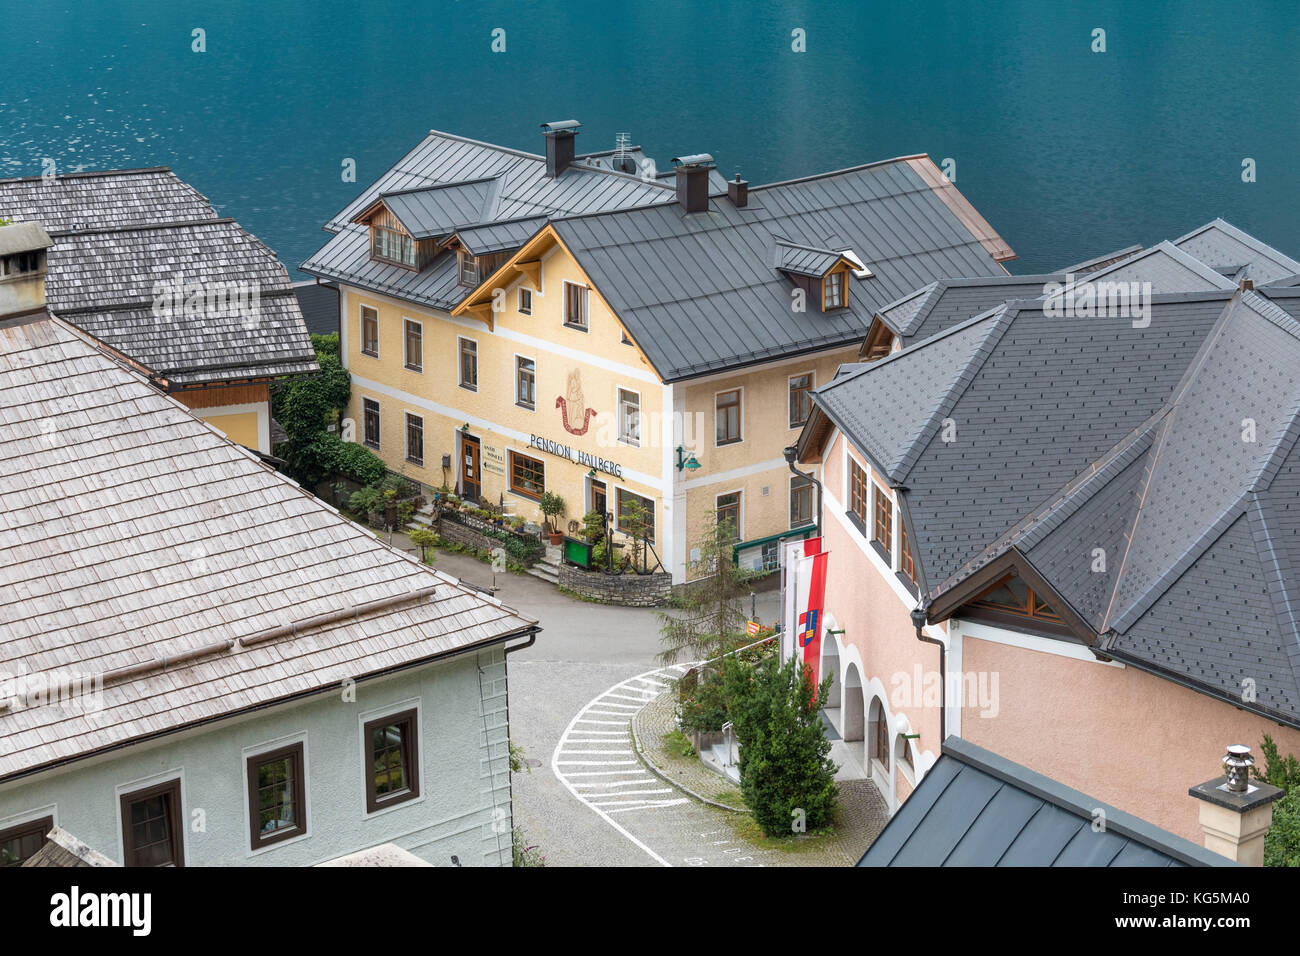 Roofs and buildings of the austrian village of Hallstatt, Salzkammergut Region, Upper Austria, Austria Stock Photo